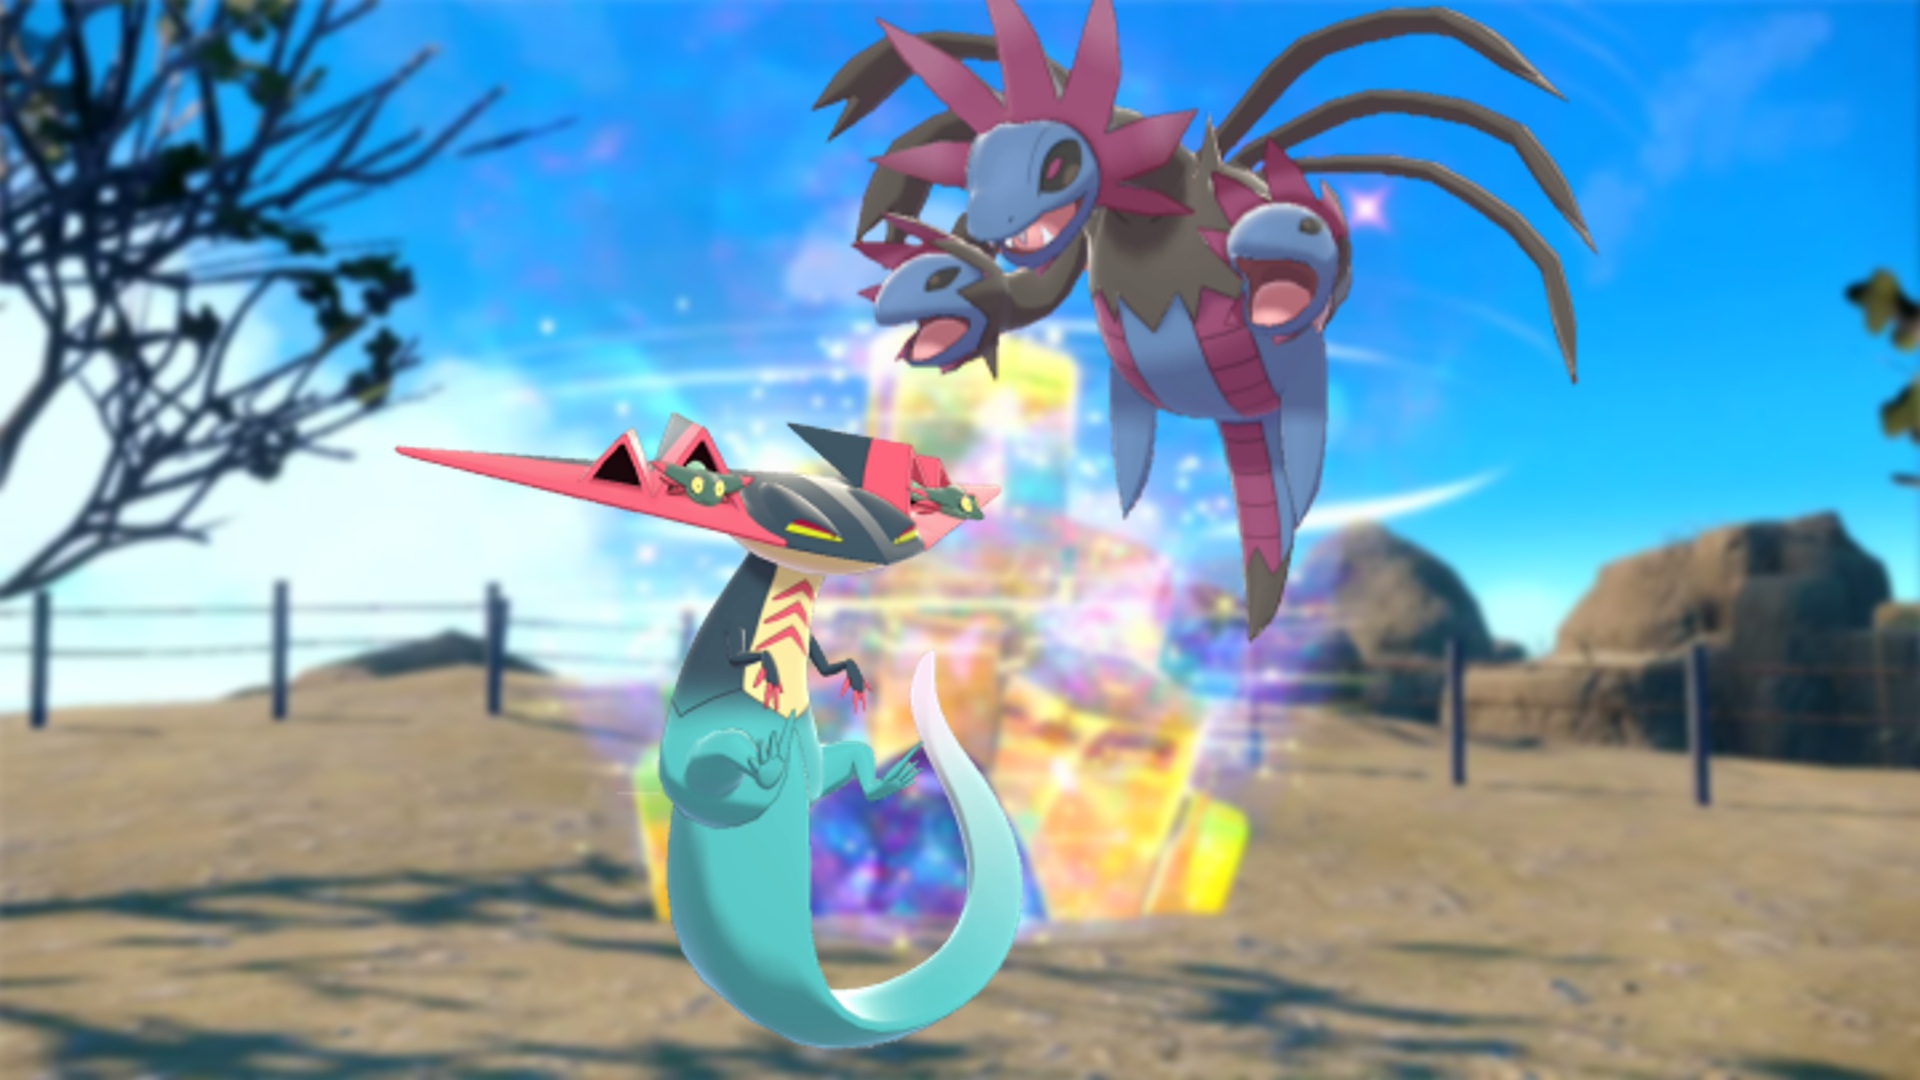 Serebii.net on X: Serebii Update: The next Pokémon Scarlet & Violet Tera  Raid Battle event has been announced. Features Hydreigon in Pokémon Scarlet  & Dragapult in Pokémon Violet. Runs January 6th through